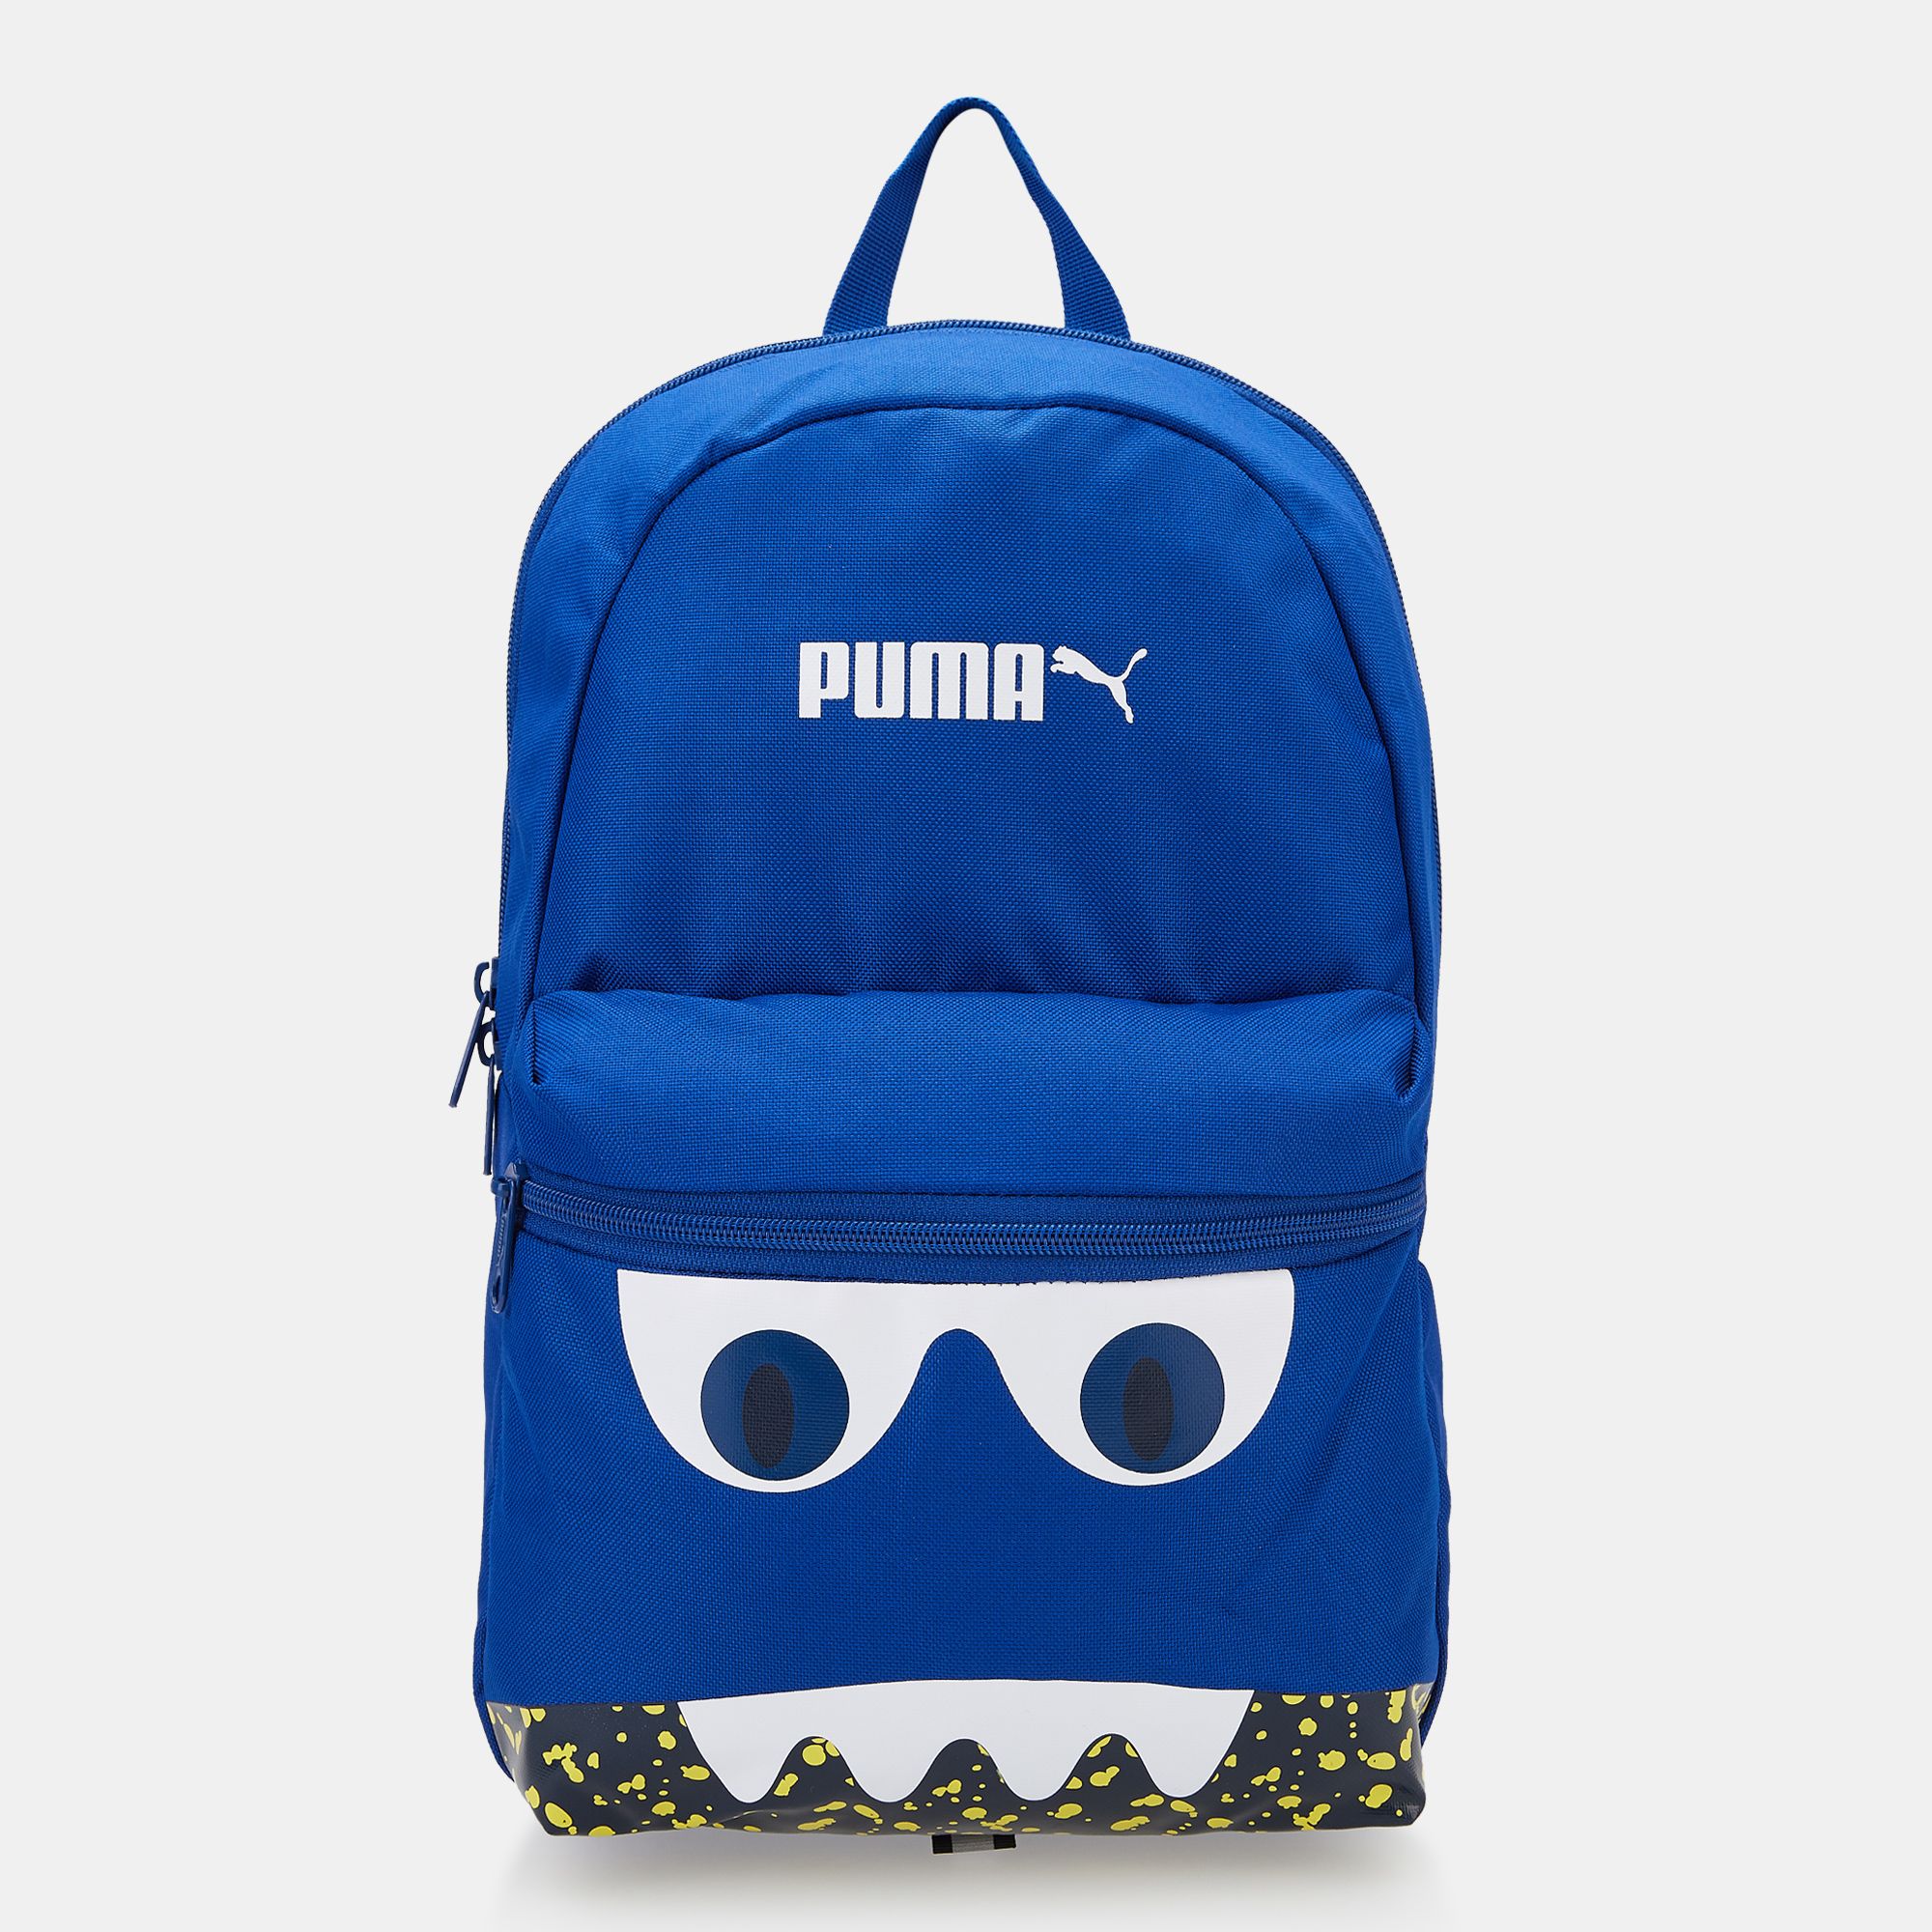 puma cookie monster backpack